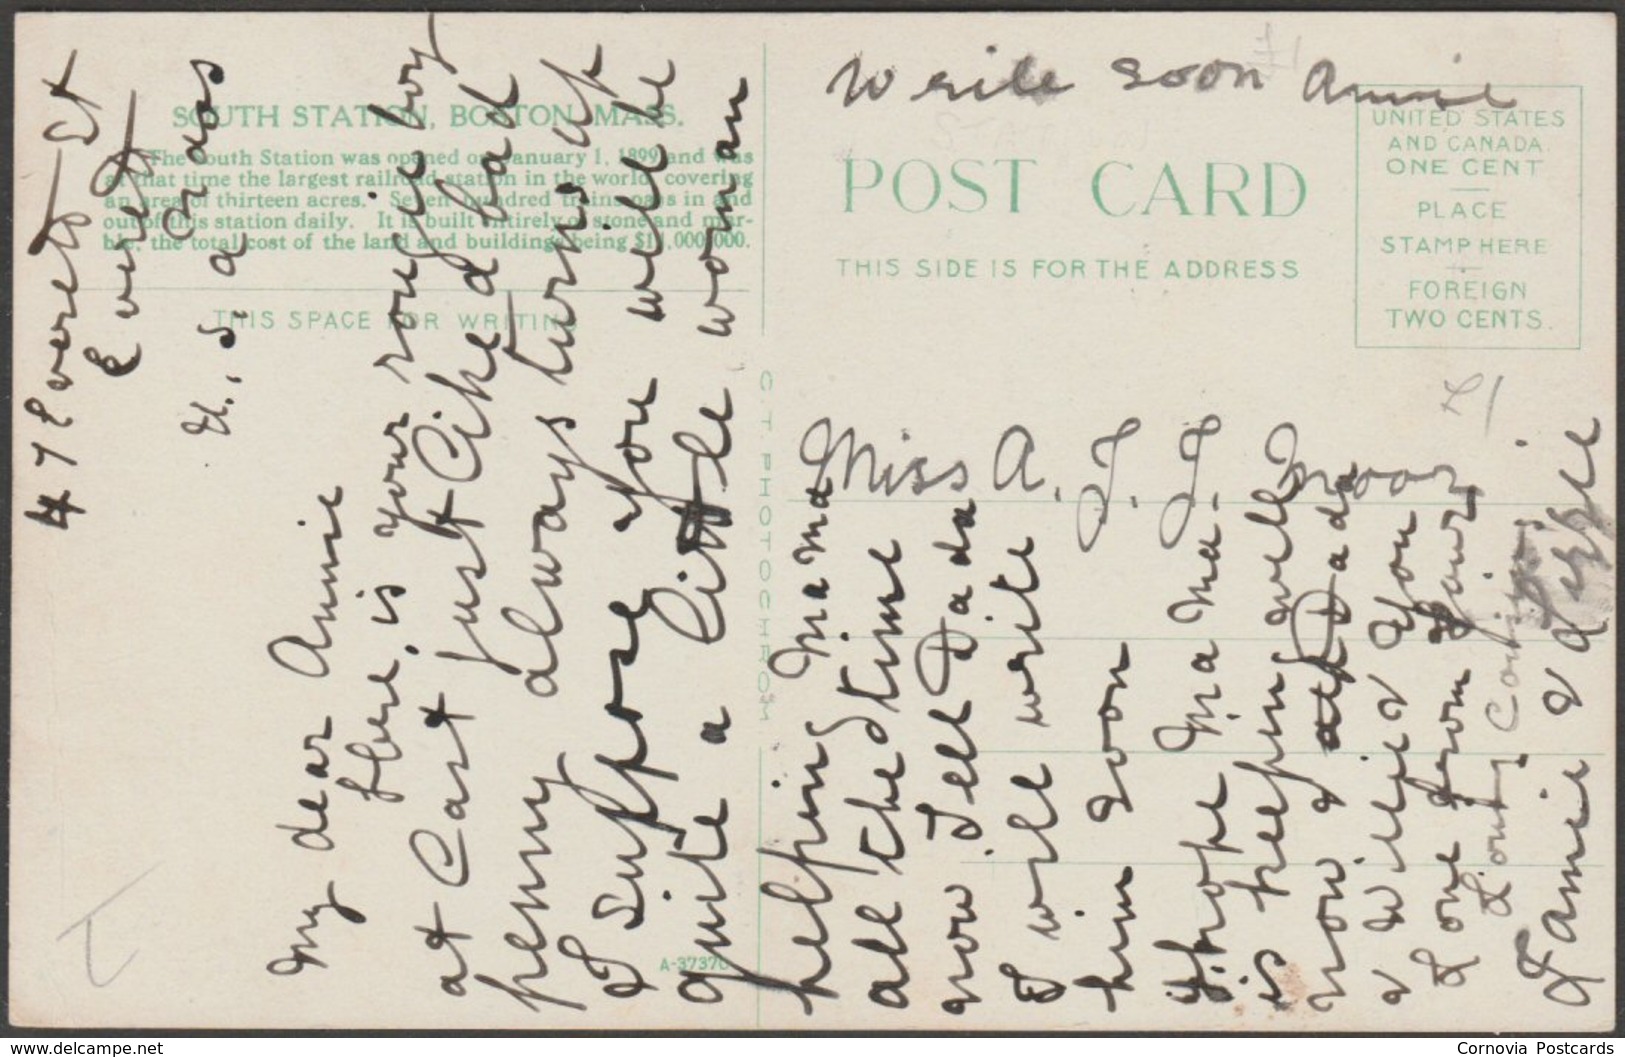 South Station, Boston, Massachusetts, 1913 - Curt Teich Postcard - Boston